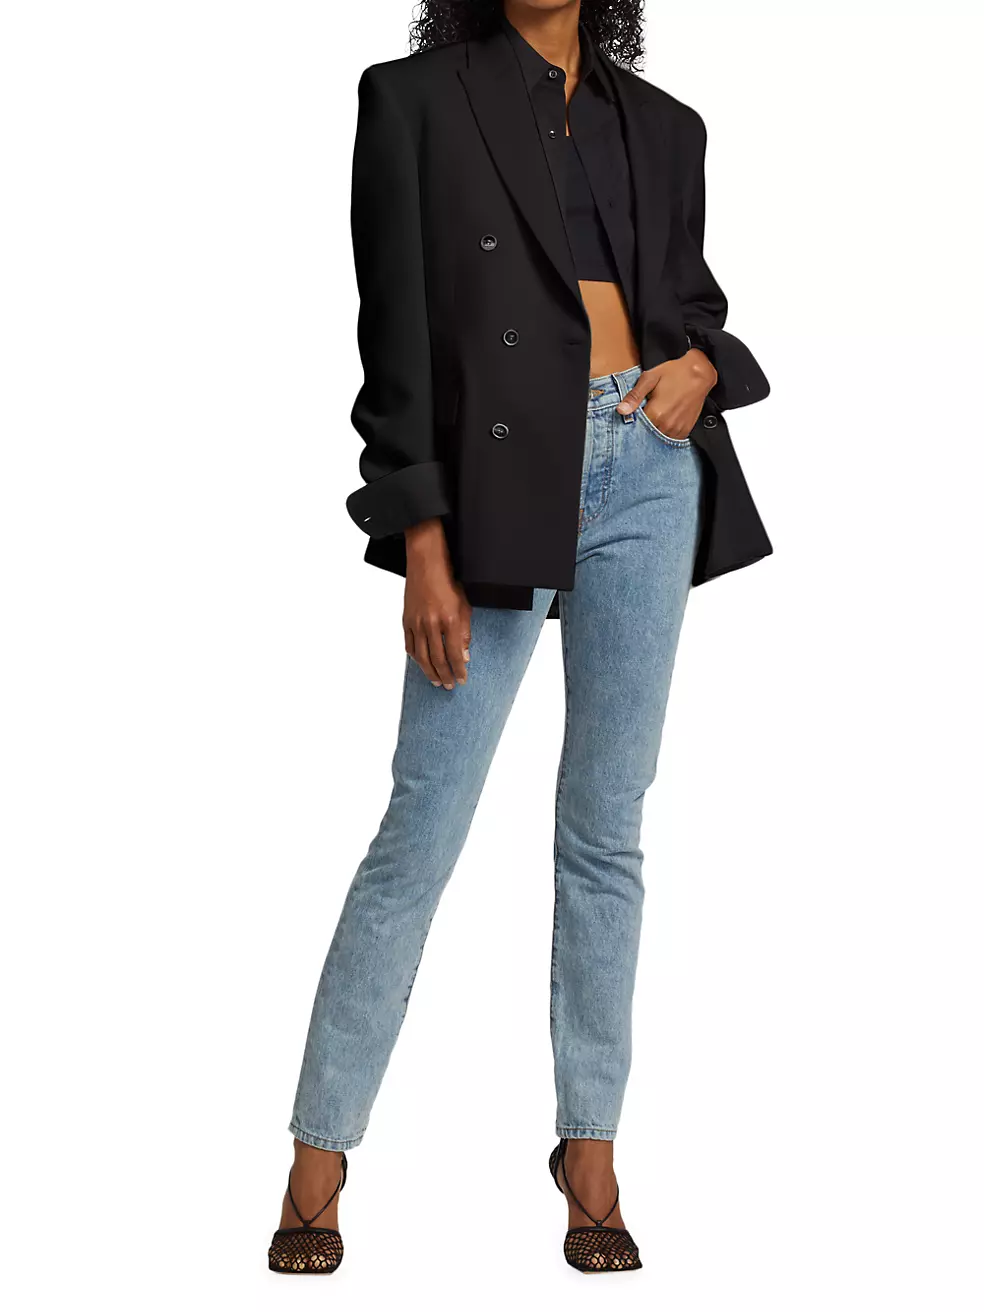 Gucci Woman - Uniform 100% Wool Blazer - Excellent Condition Size 42